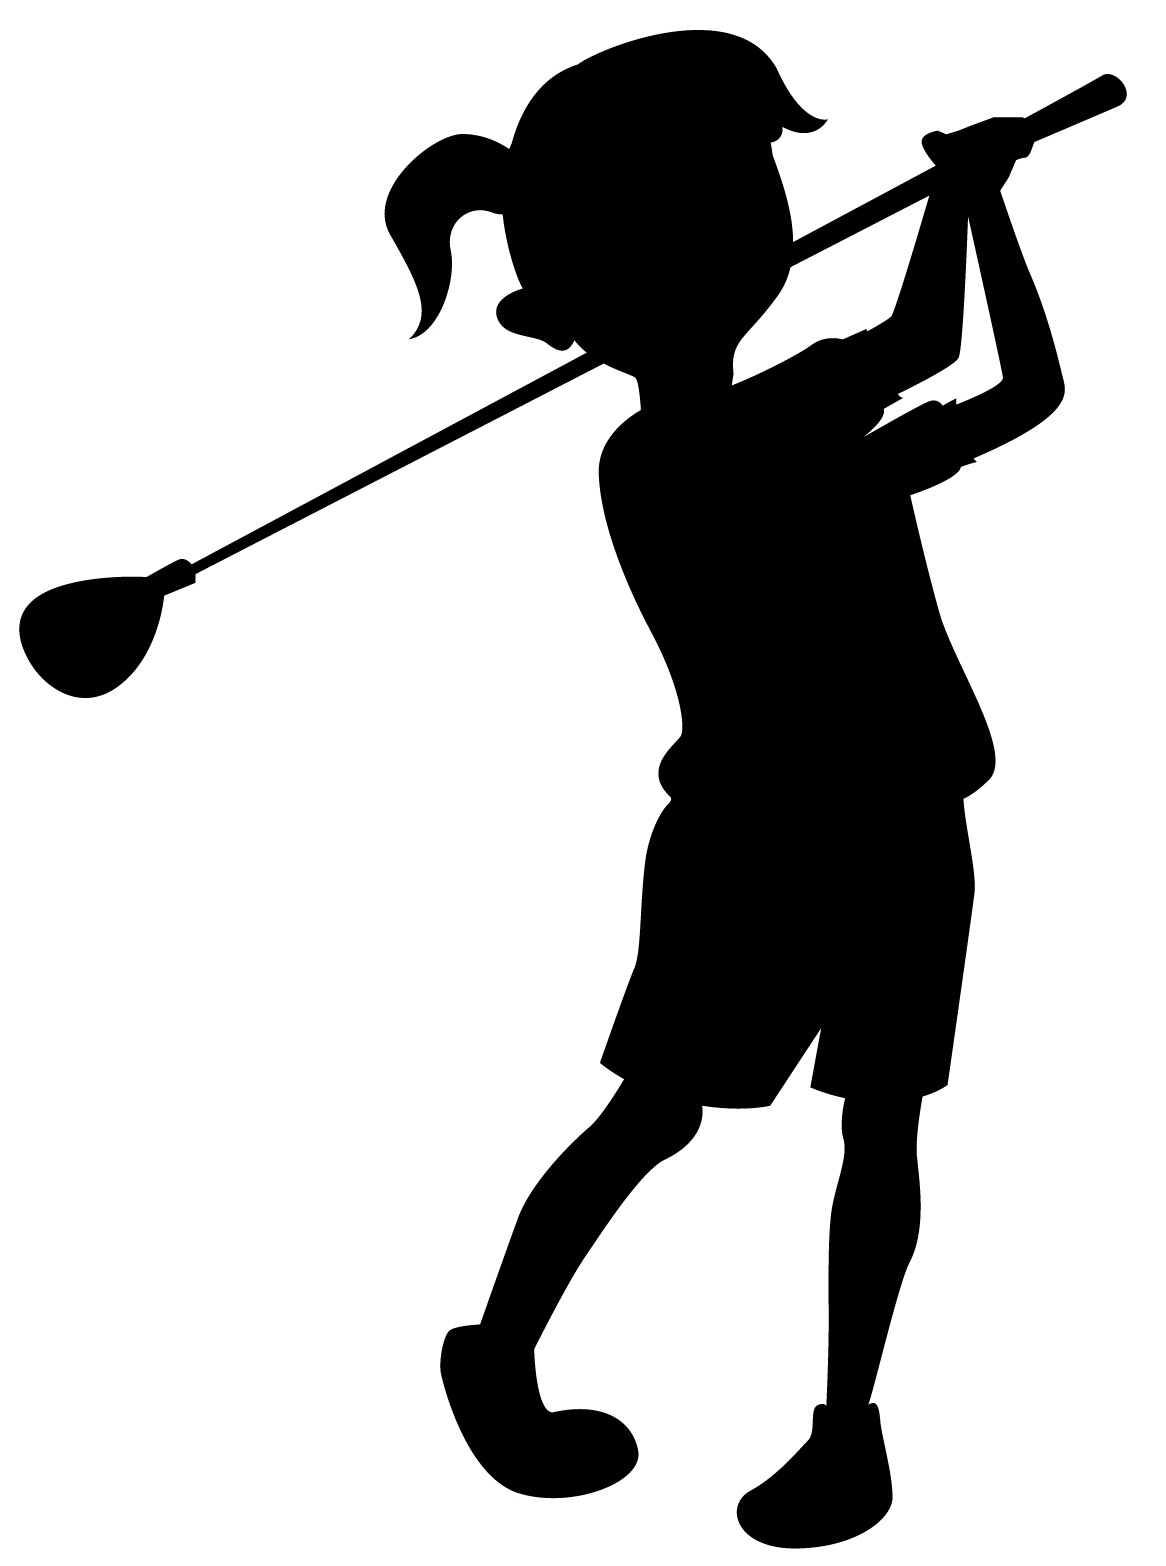 3rd Annual Adoption Open Golf Tournament